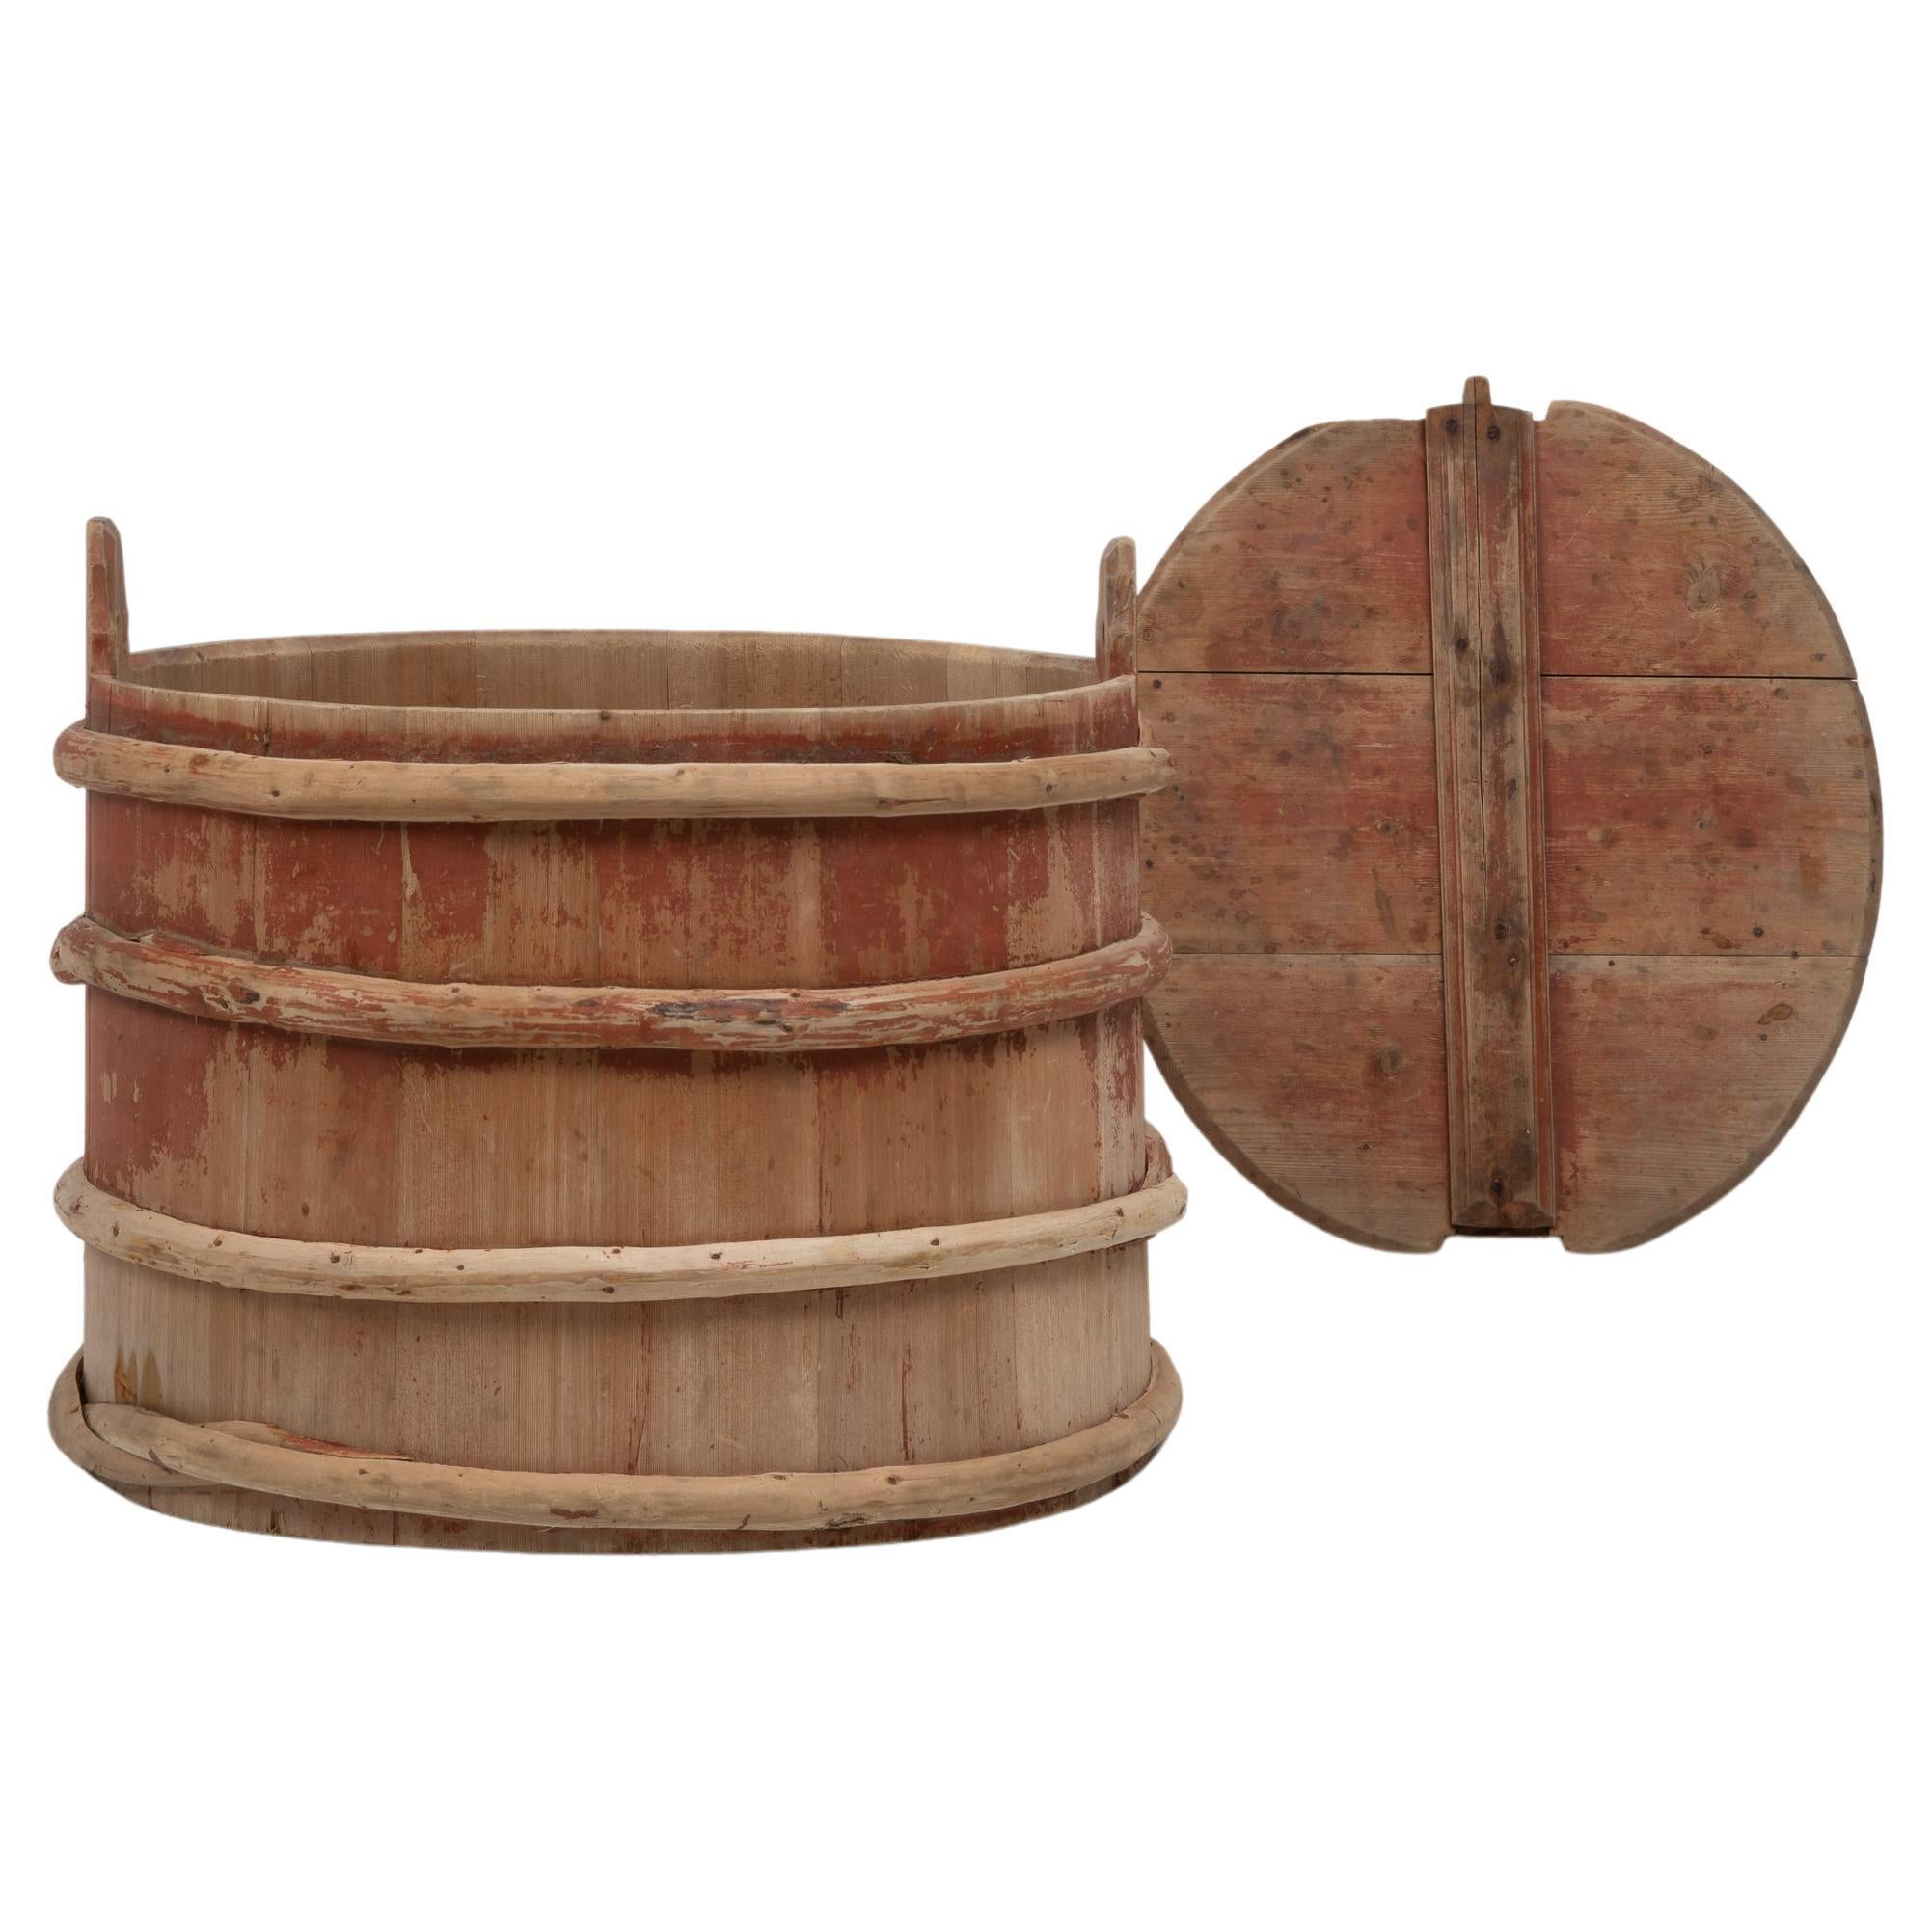 19th Century Swedish Folk Art Wooden Barrel